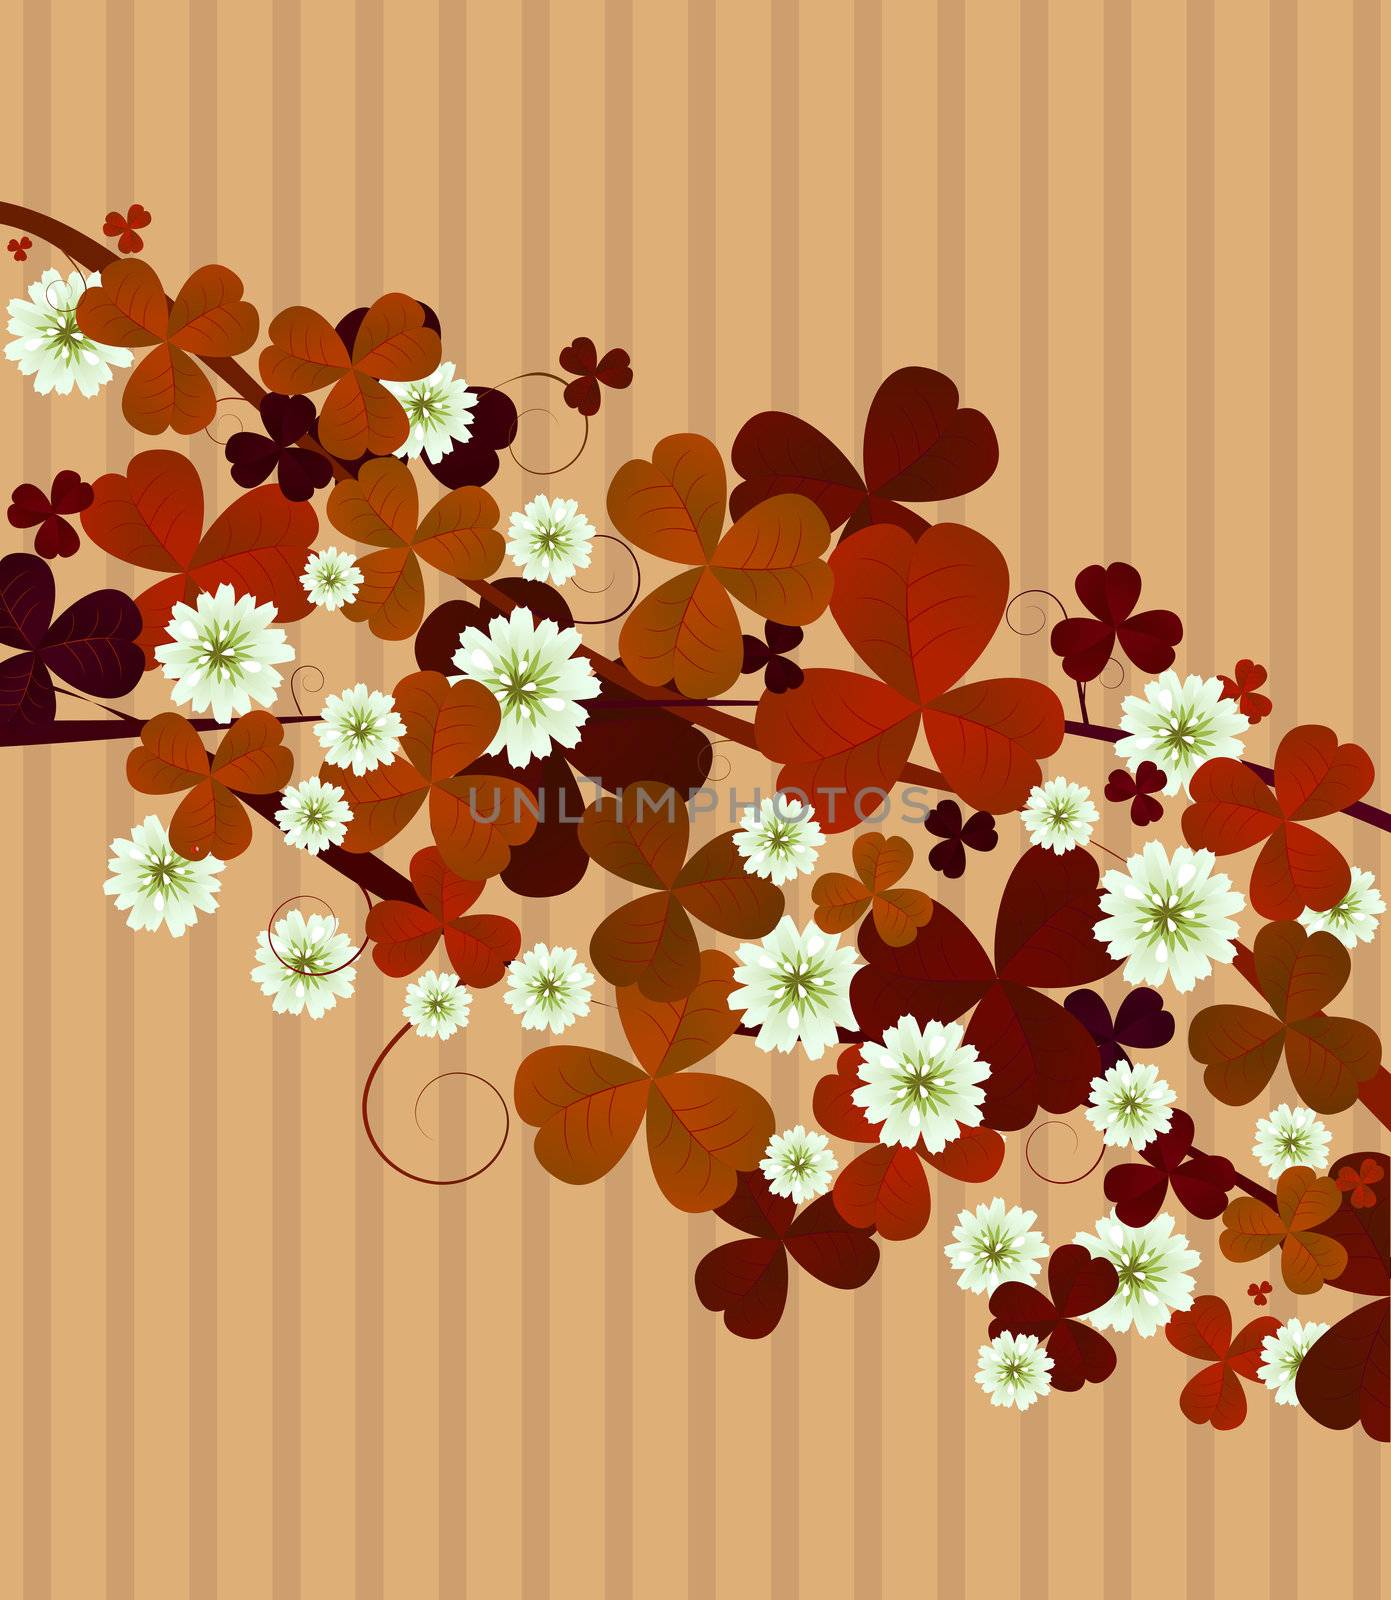 Clover leaf background by Lirch